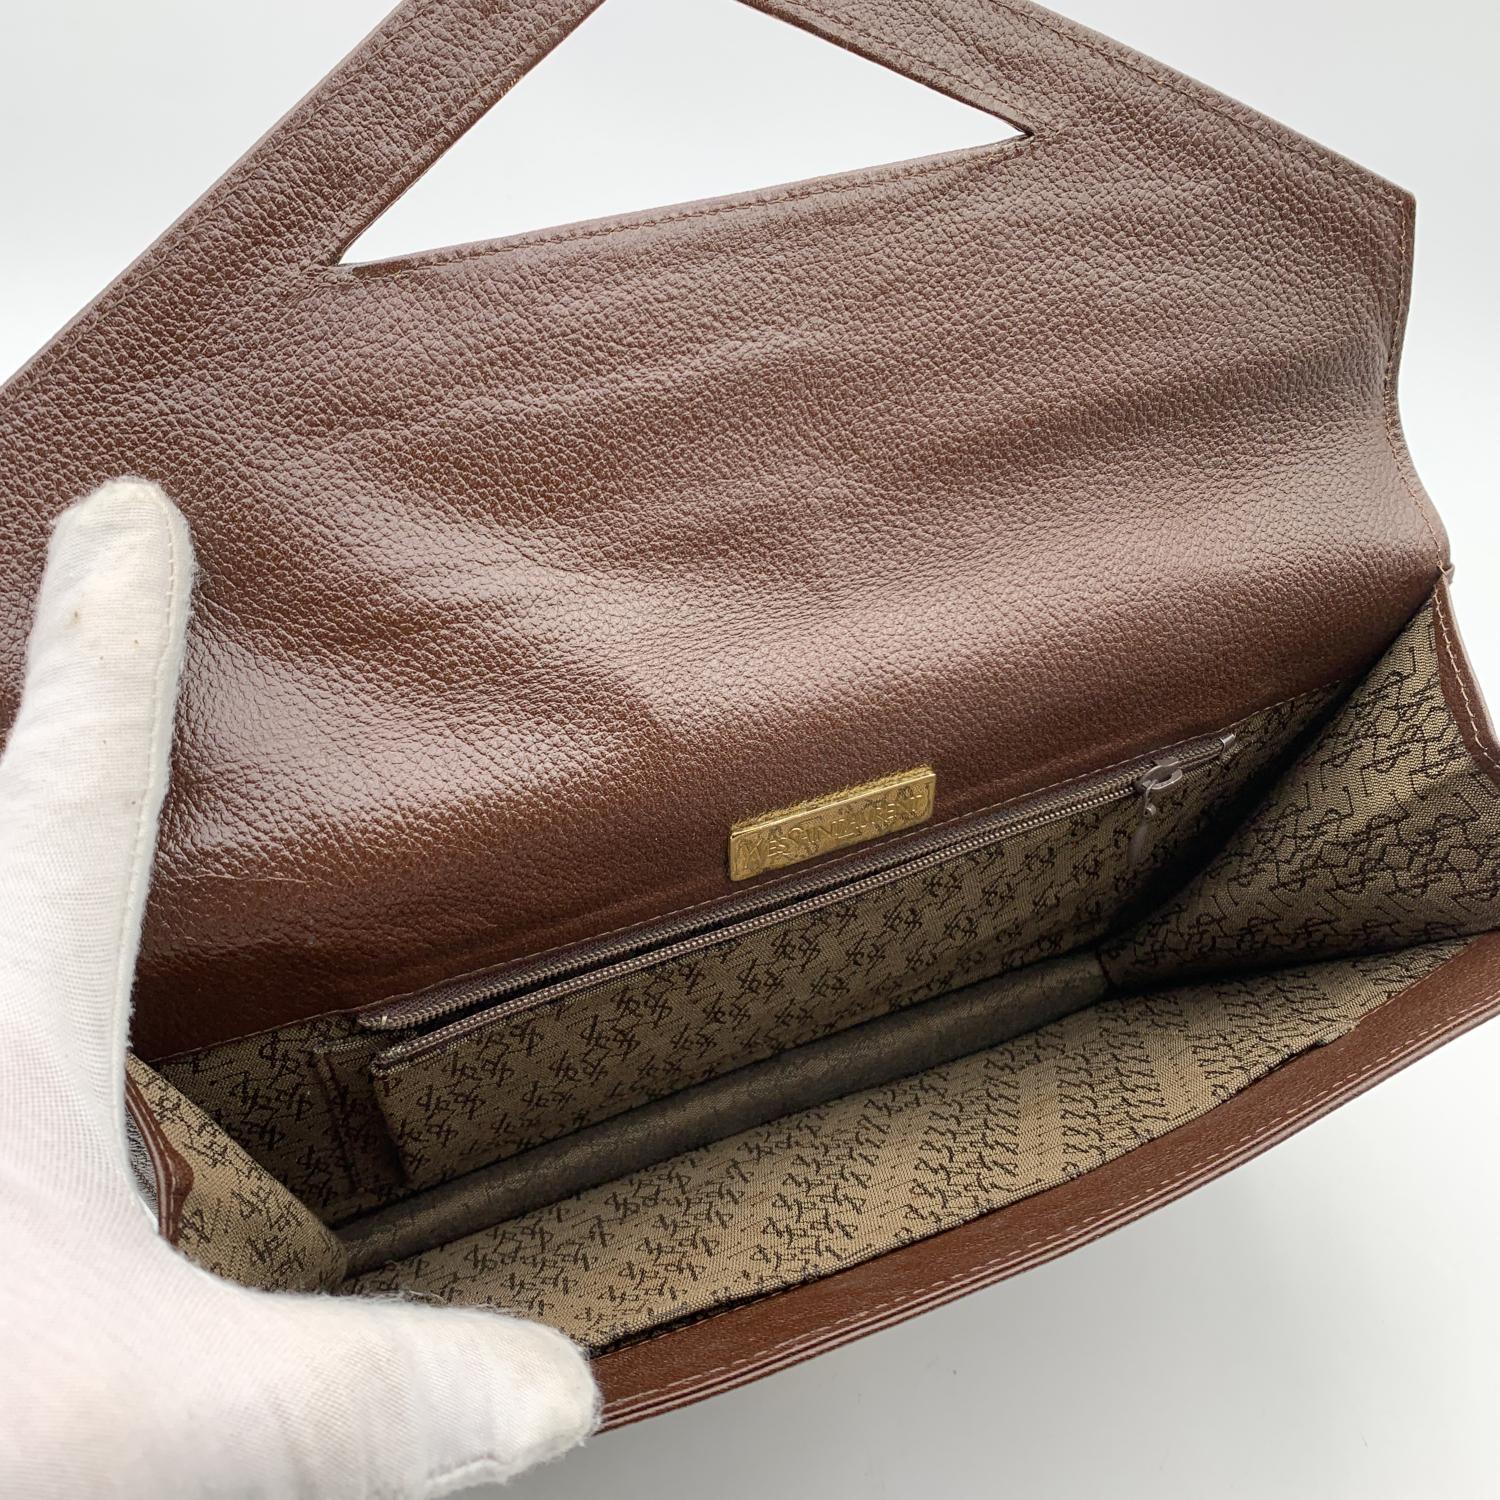 Women's or Men's Yves Saint Laurent Vintage Brown Leather Clutch Bag Handbag